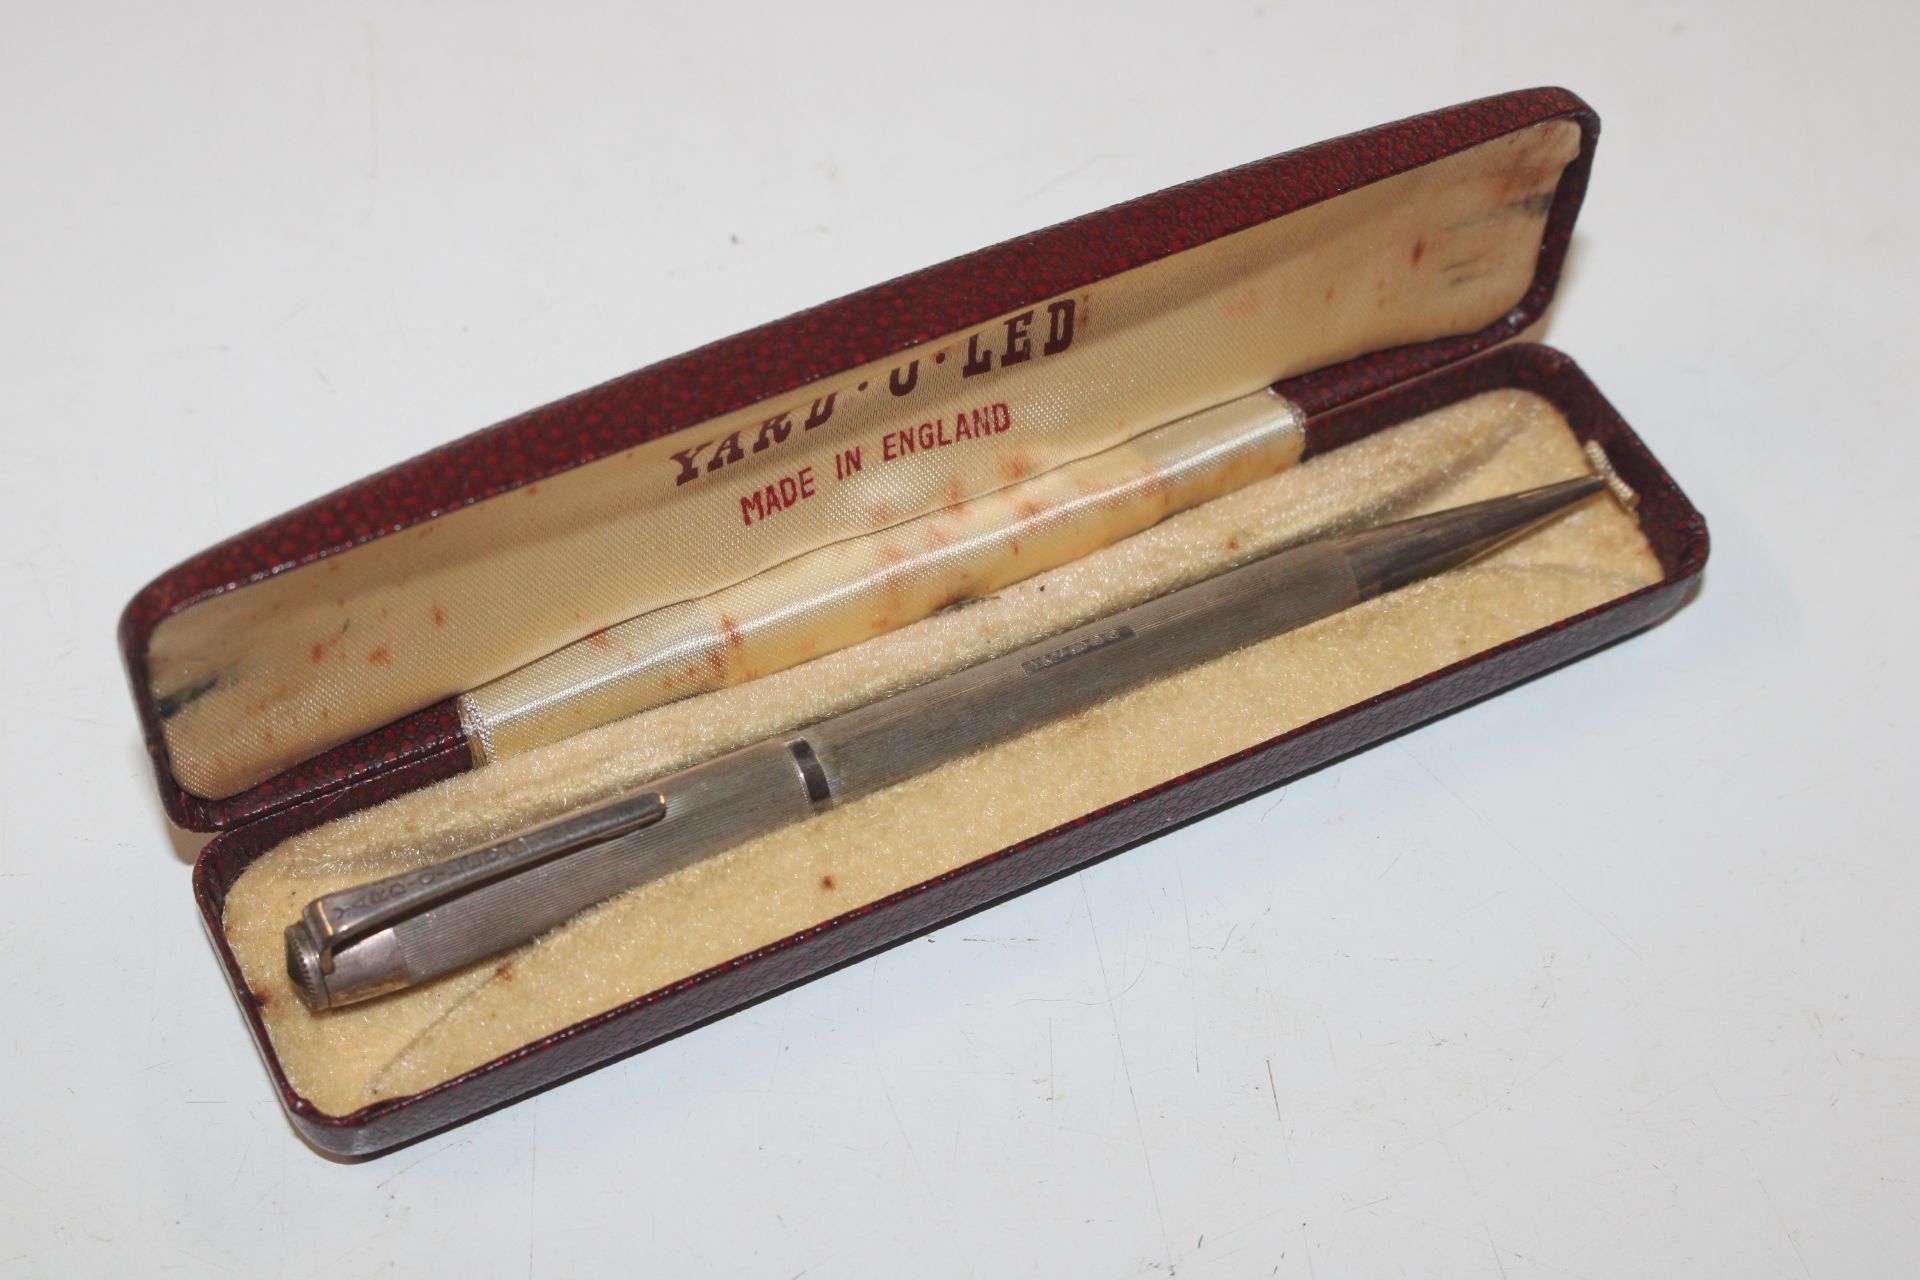 A silver Yard -O-Led propelling pencil